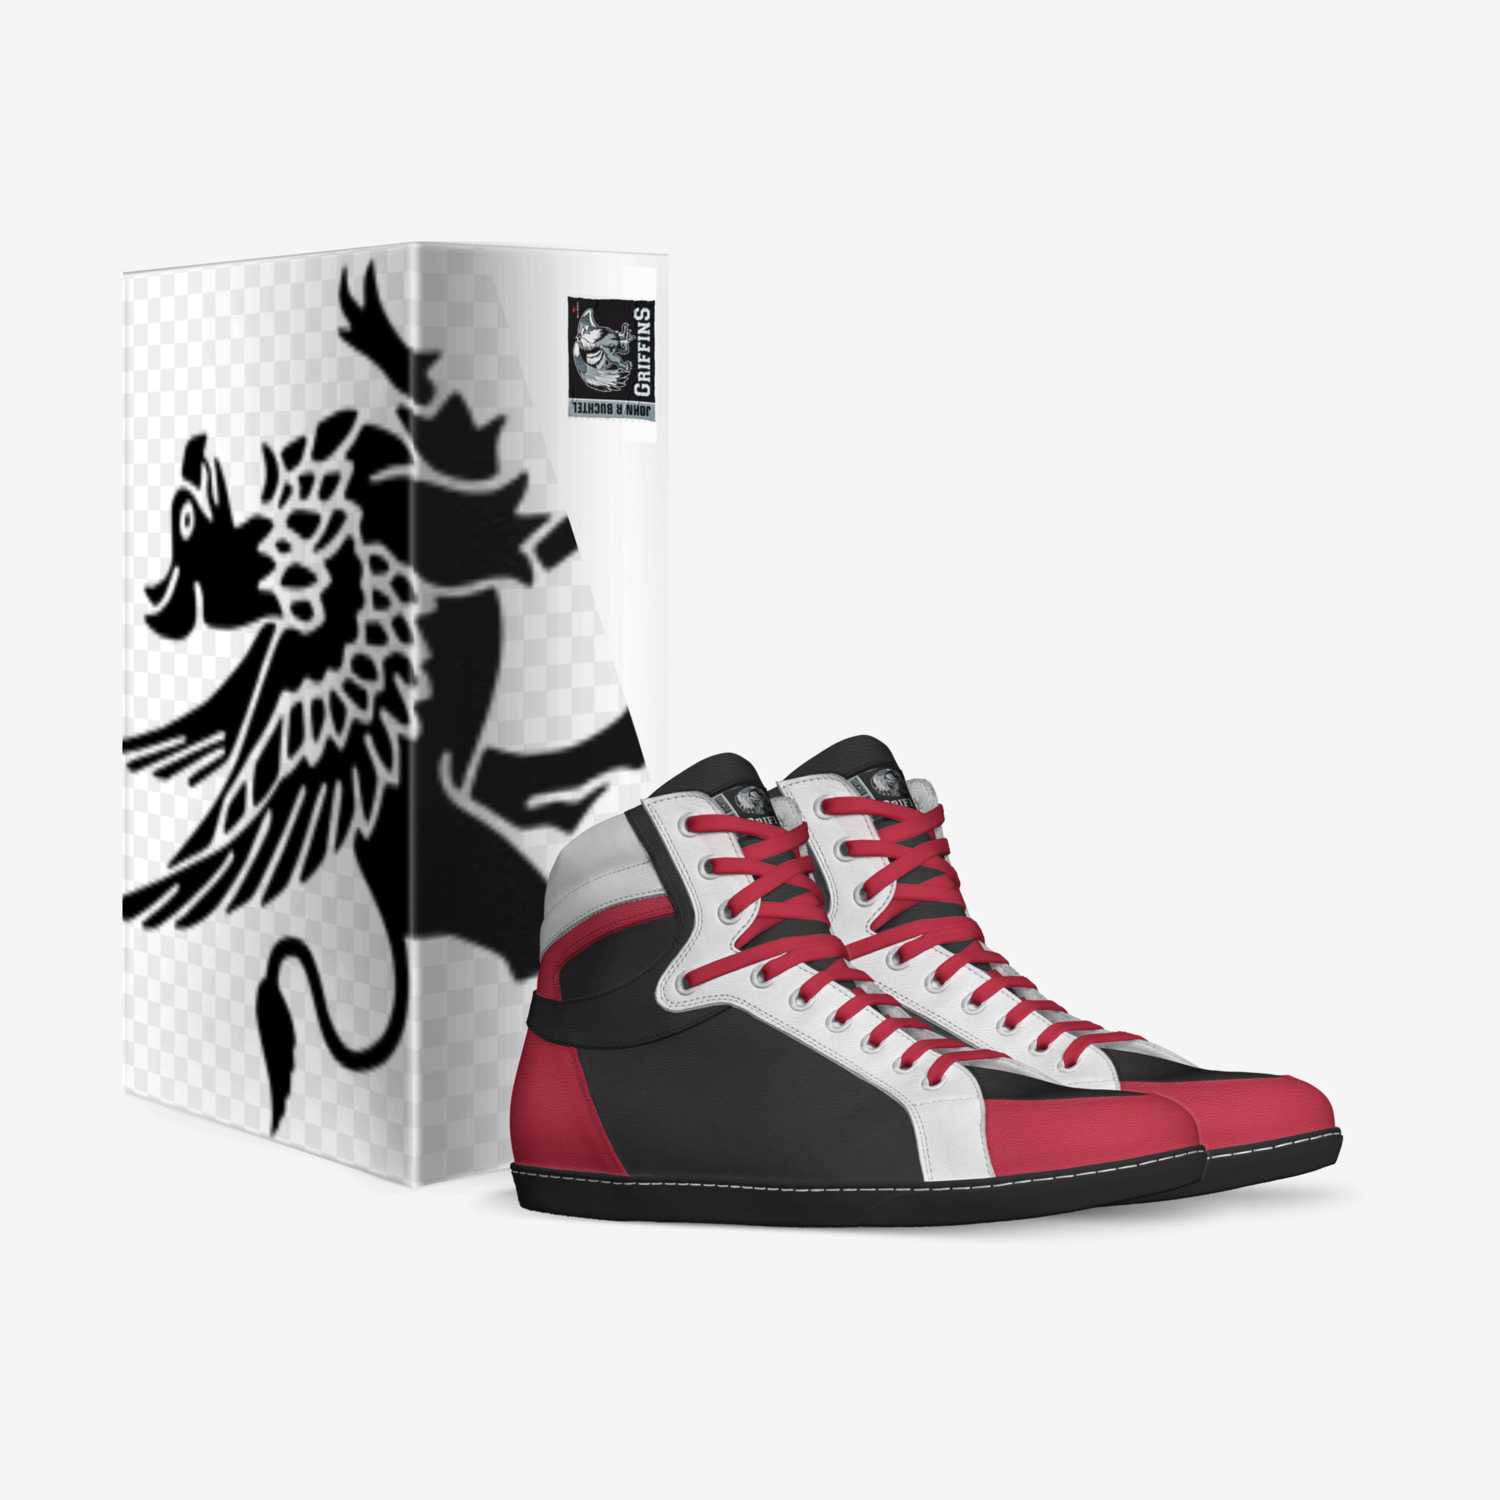 Bääls Dēp custom made in Italy shoes by Reginal Jones Norment | Box view